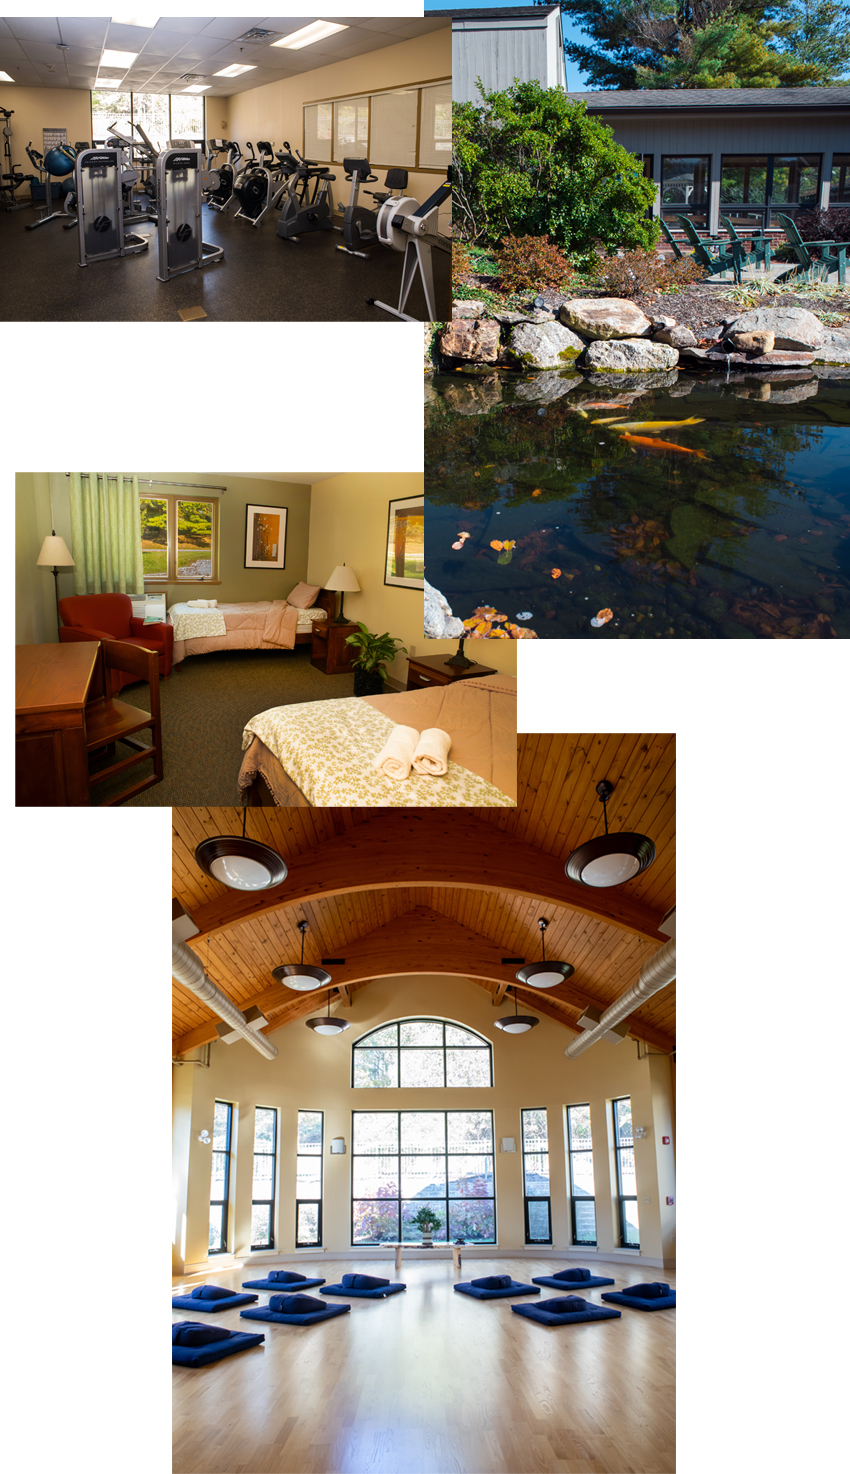 Collage of images taken around Mirmont Treatment Center (workout room, Koi pond, bedroom, meditation room)